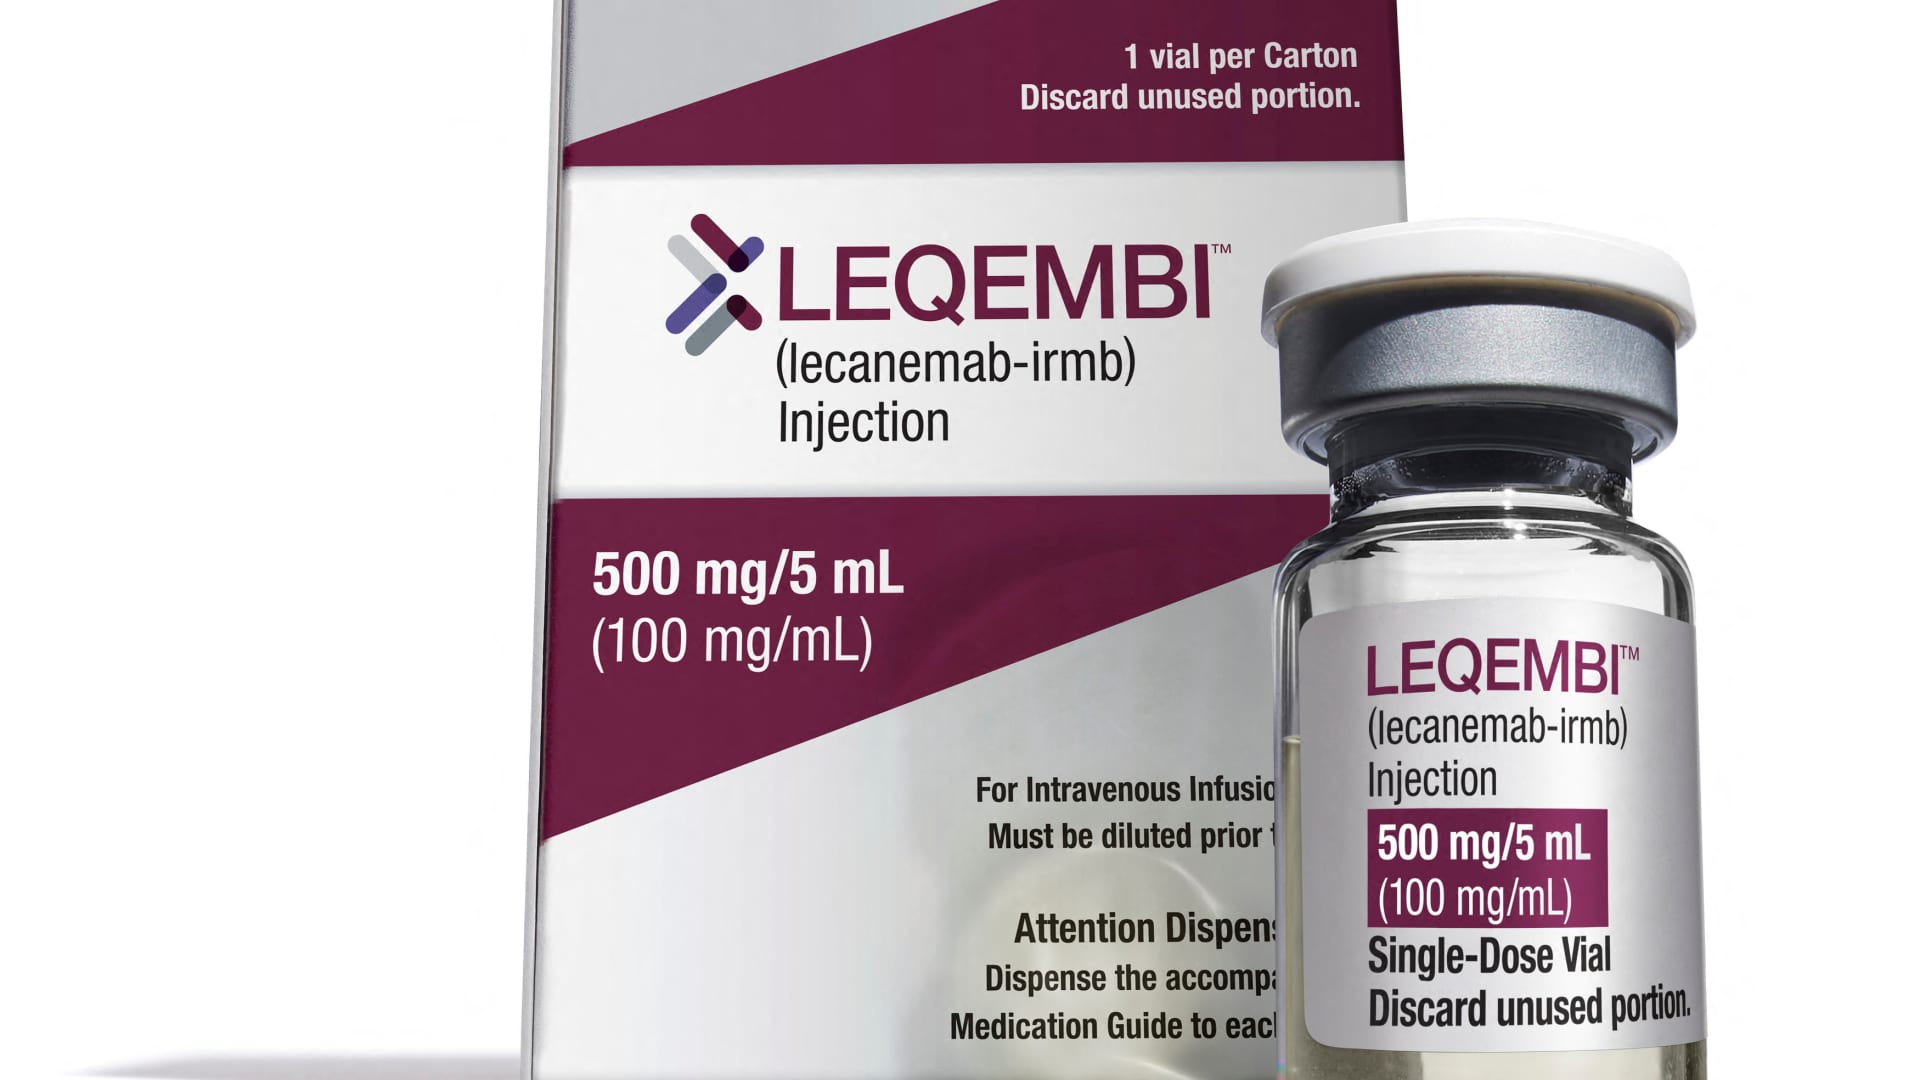 Alzheimer’s drug Leqembi shows promise as injection